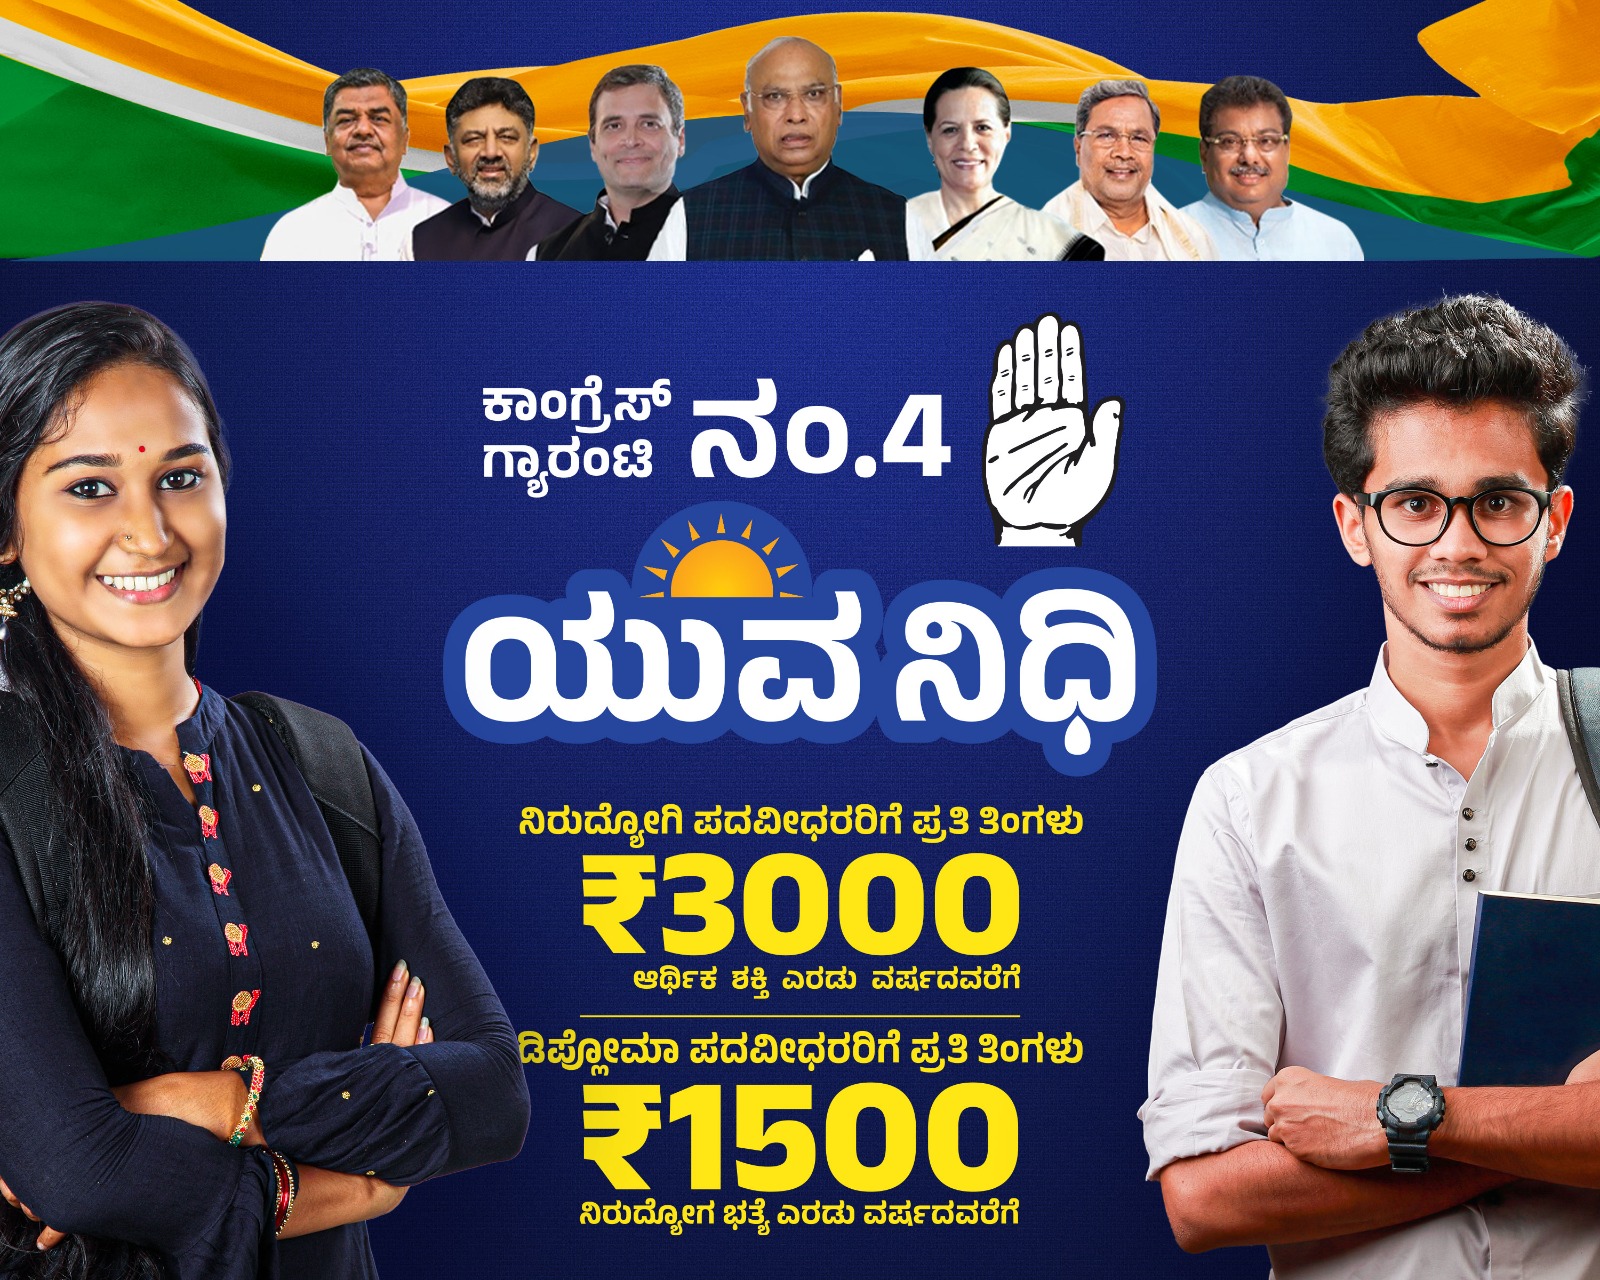 Karnataka Congress promises Rs 3,000 monthly allowance to unemployed youth